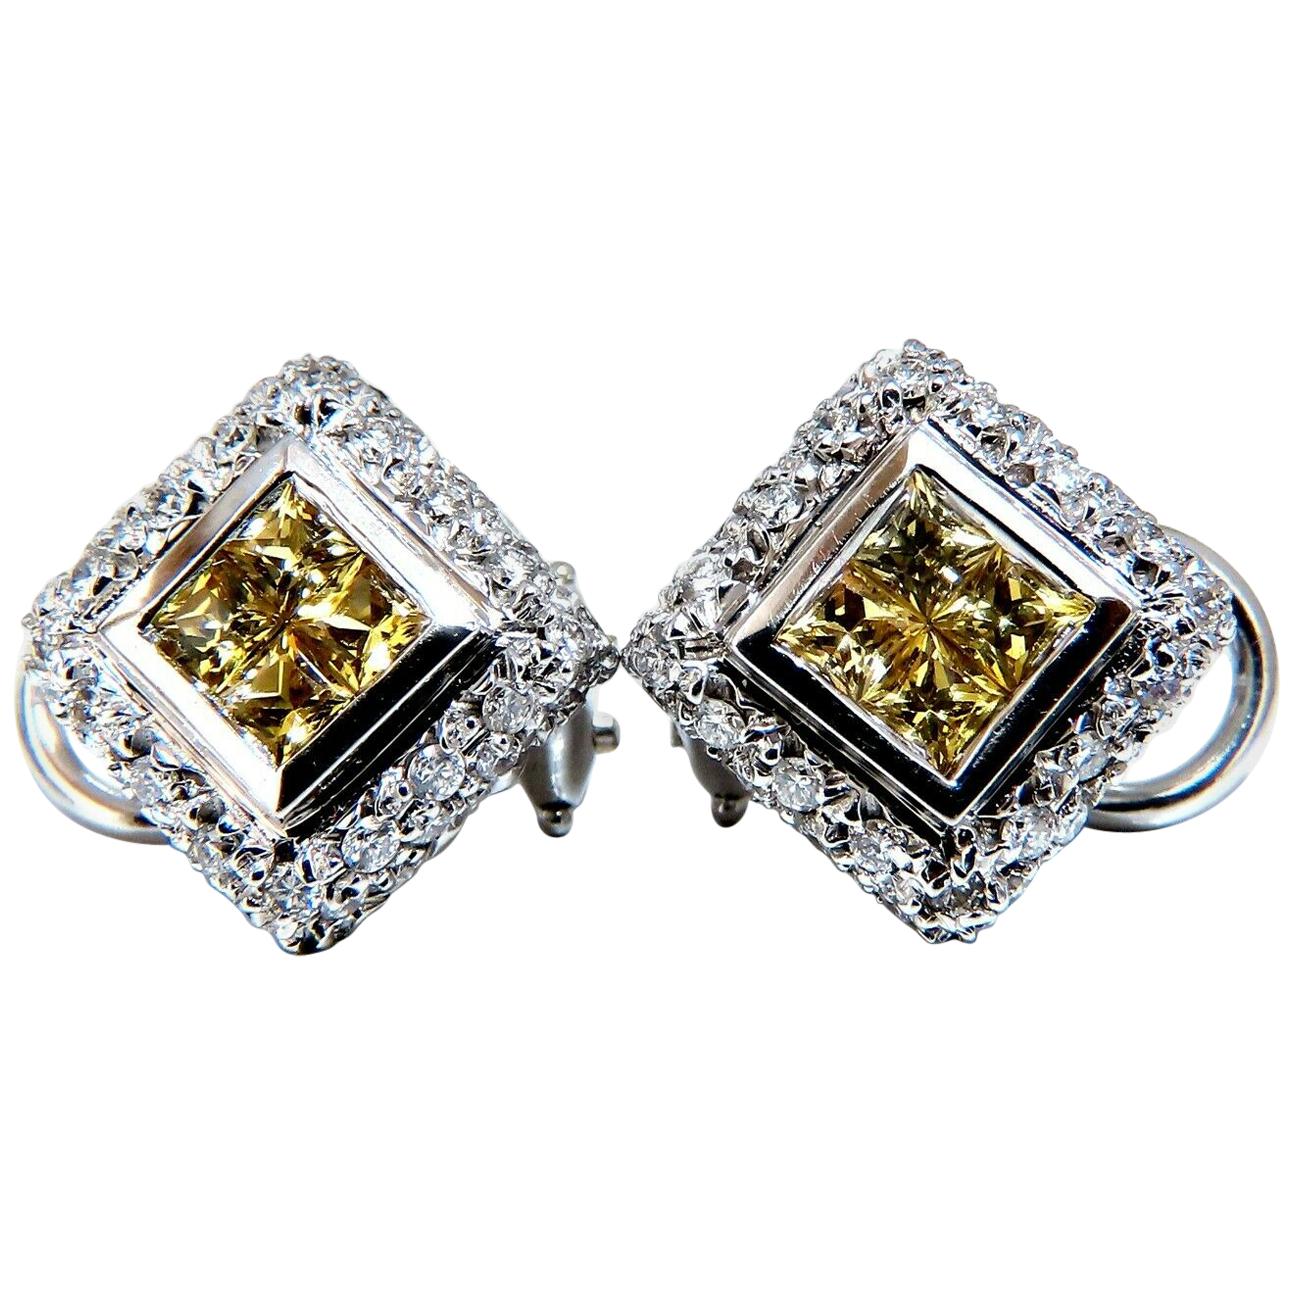 Clips d'oreilles en or 18 carats avec diamants et saphir jaune canari naturel de 1,90 carat